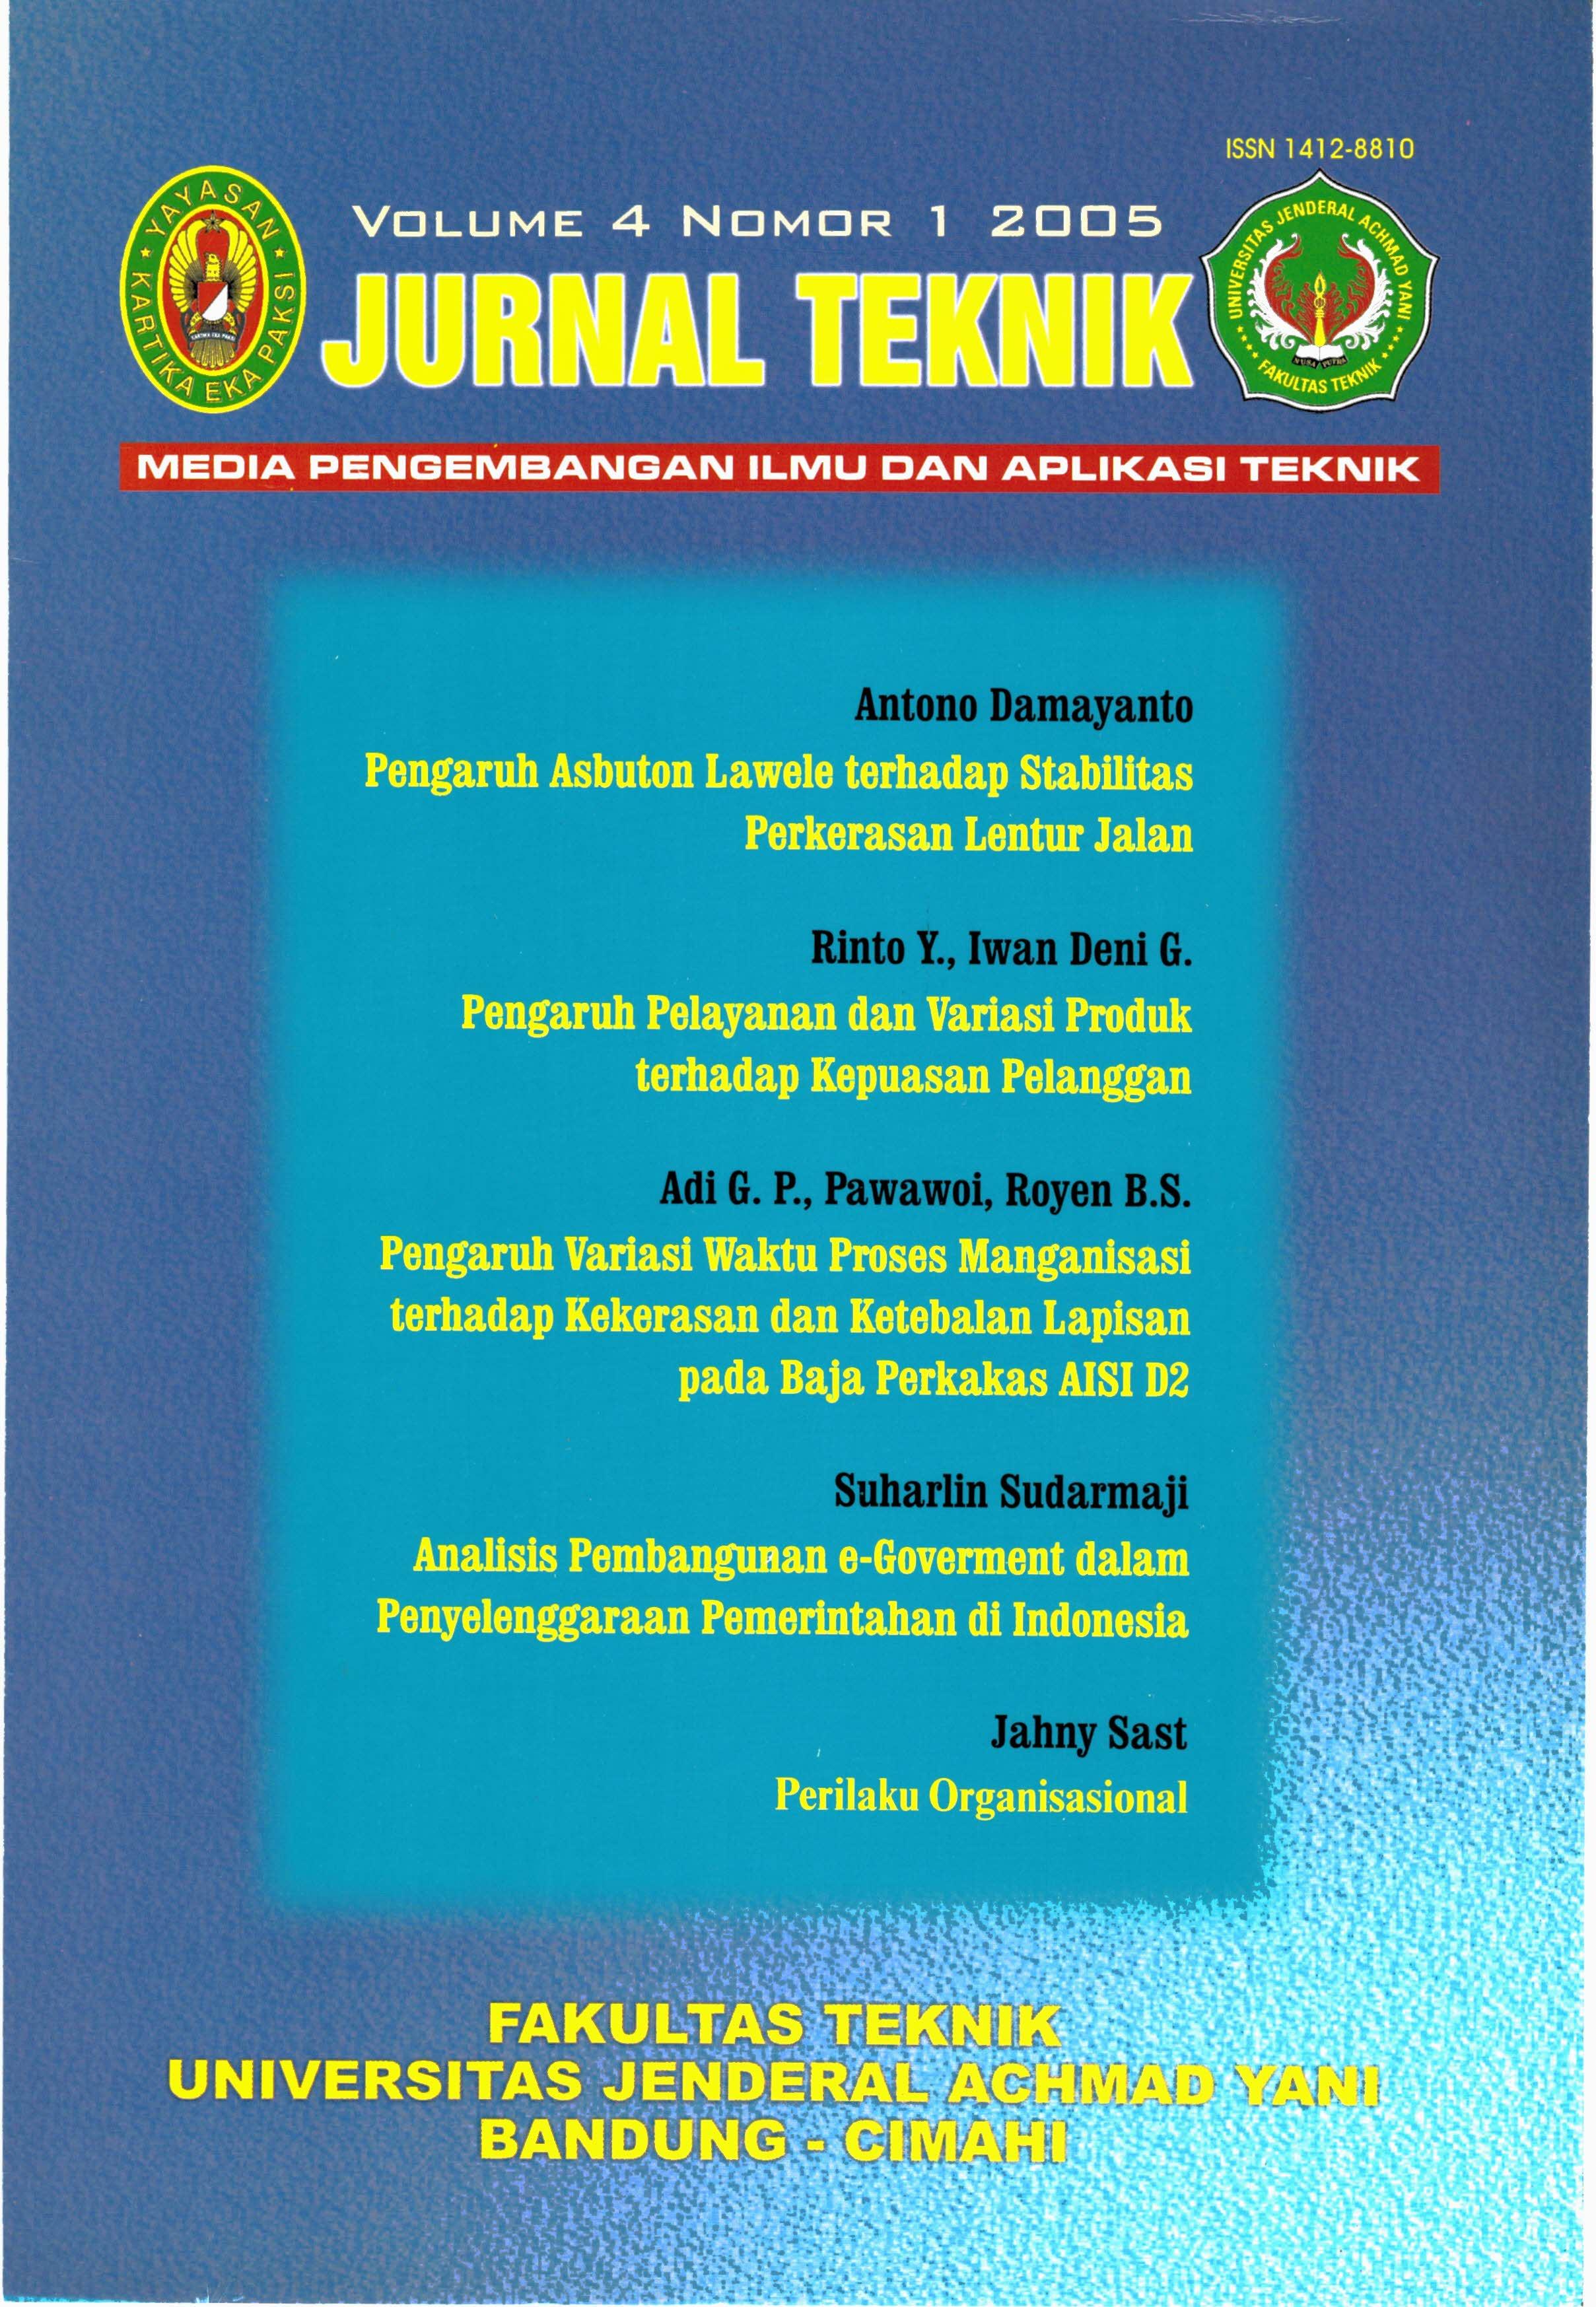 					View Vol. 4 No. 1 (2005): Jurnal Teknik - Media Pengembangan Ilmu dan Aplikasi Teknik
				